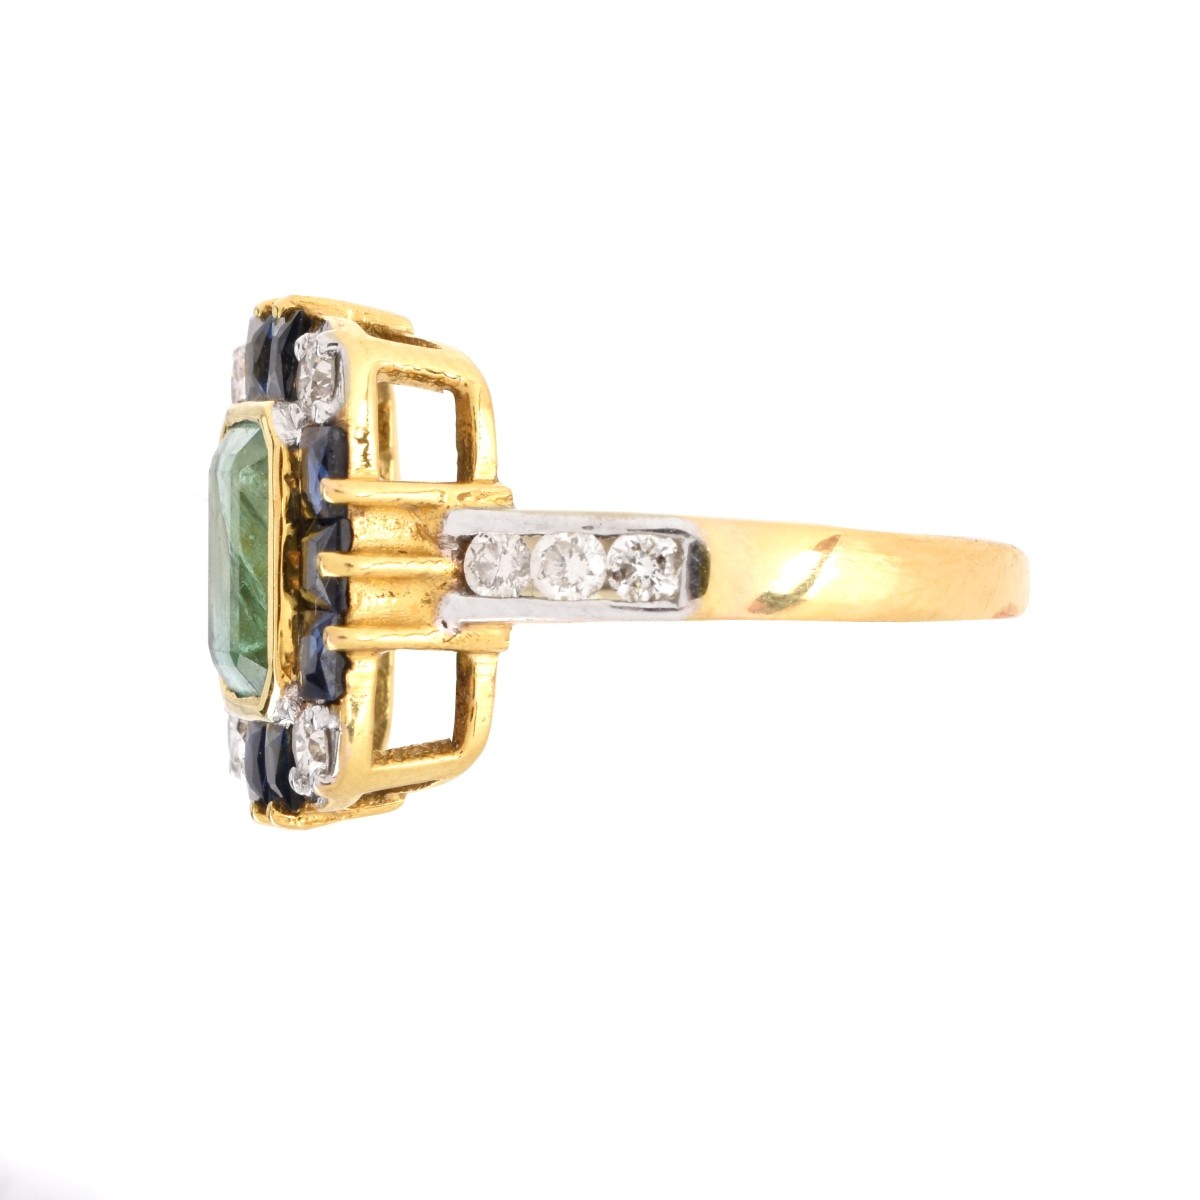 GAL Emerald, Sapphire, Diamond and 18K Ring